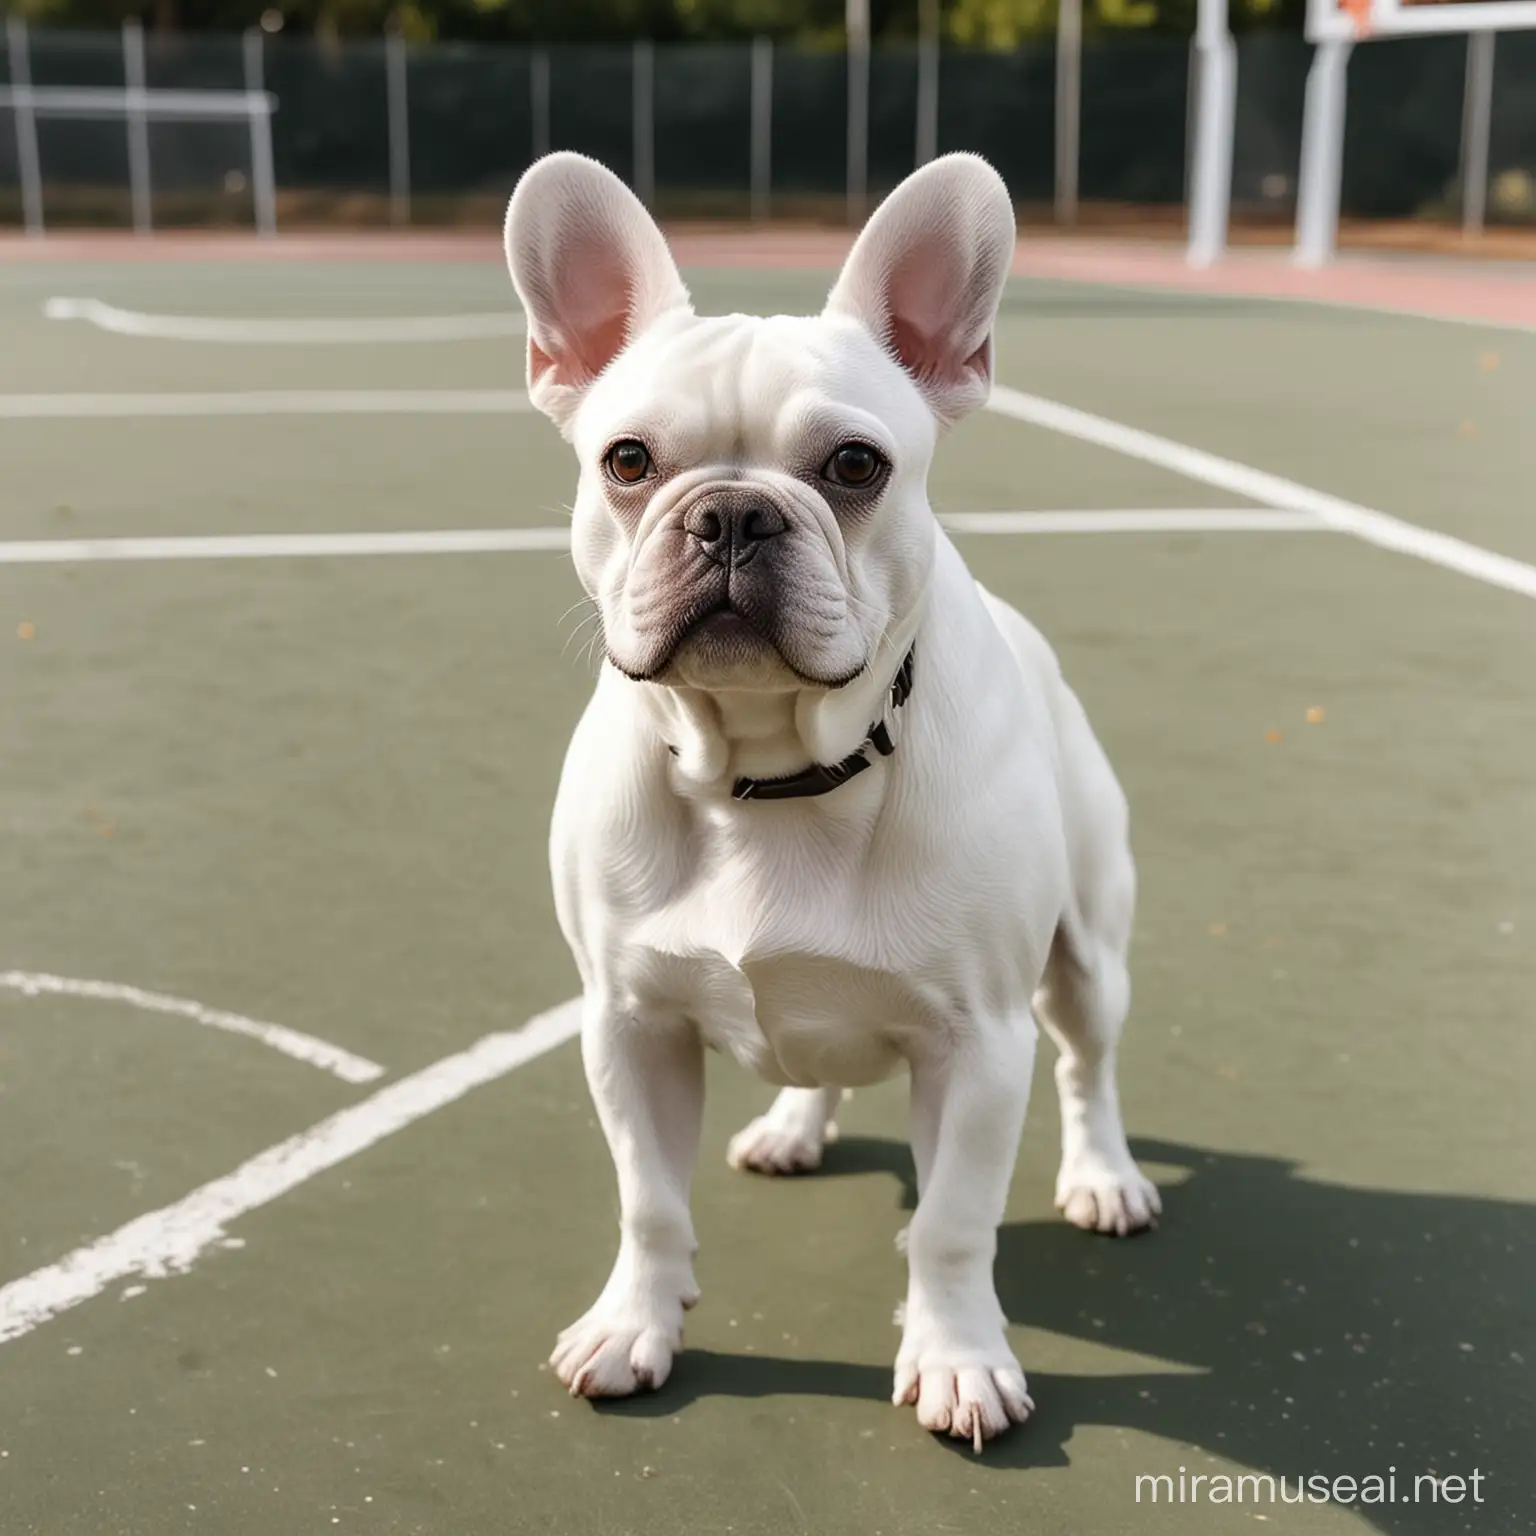 White French Bulldog Playing on Urban Basketball Court